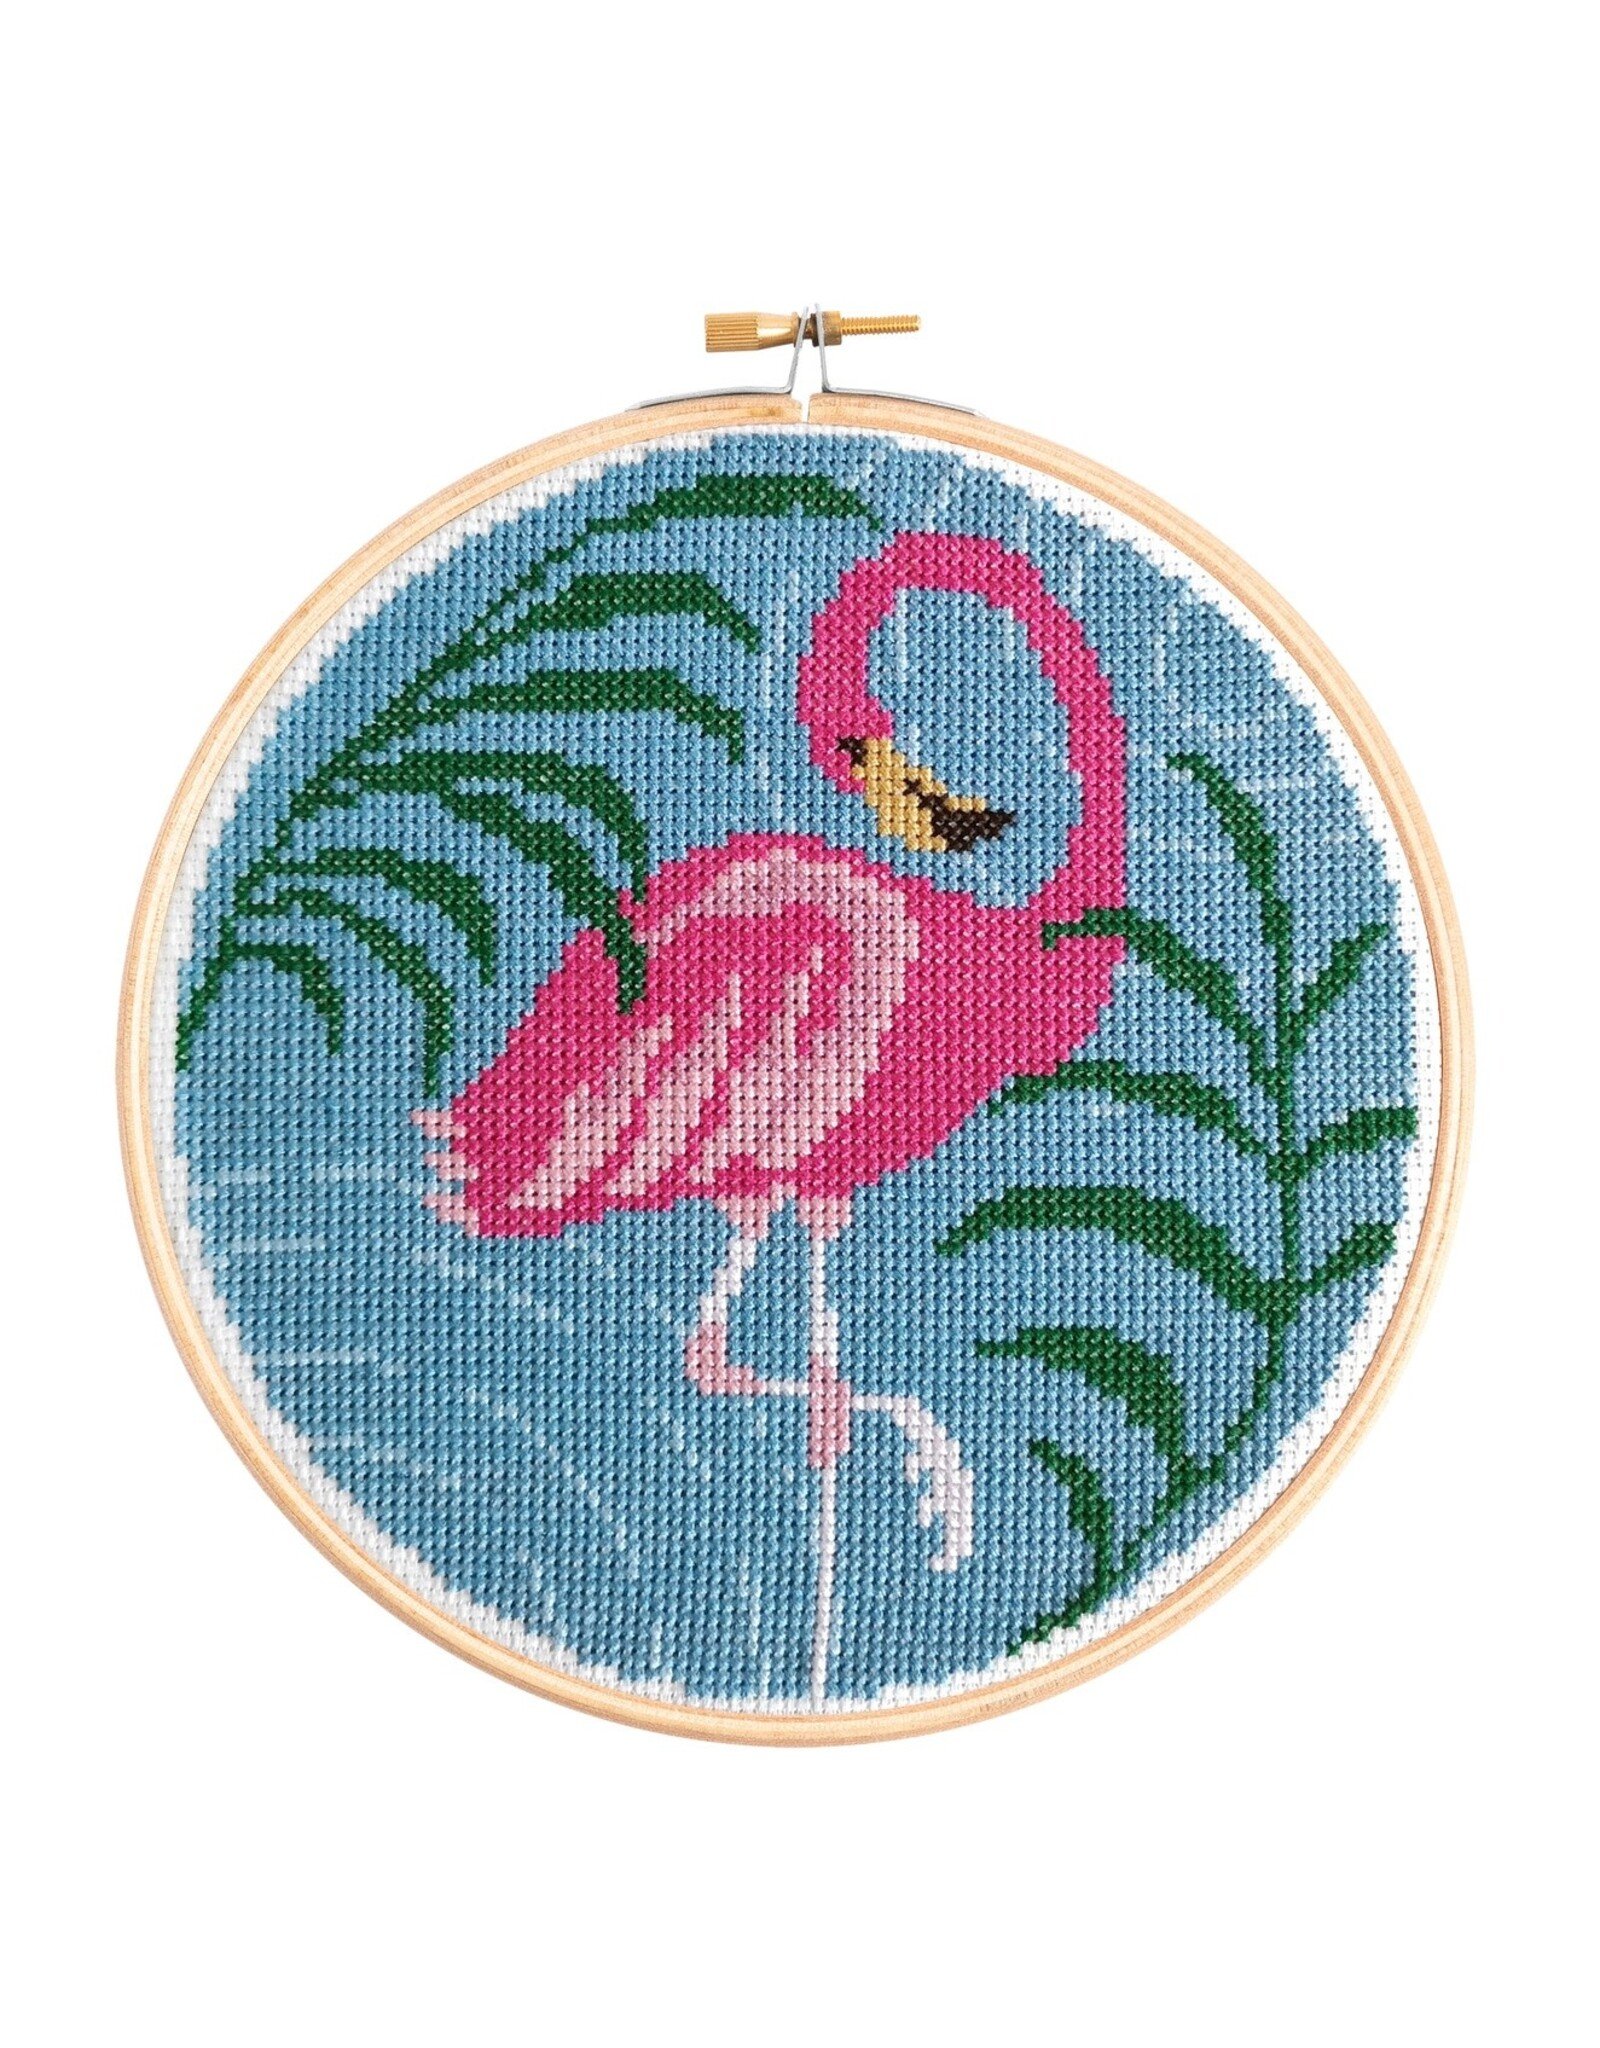 Hawthorne Handmade Flamingo Cross Stitch Kit